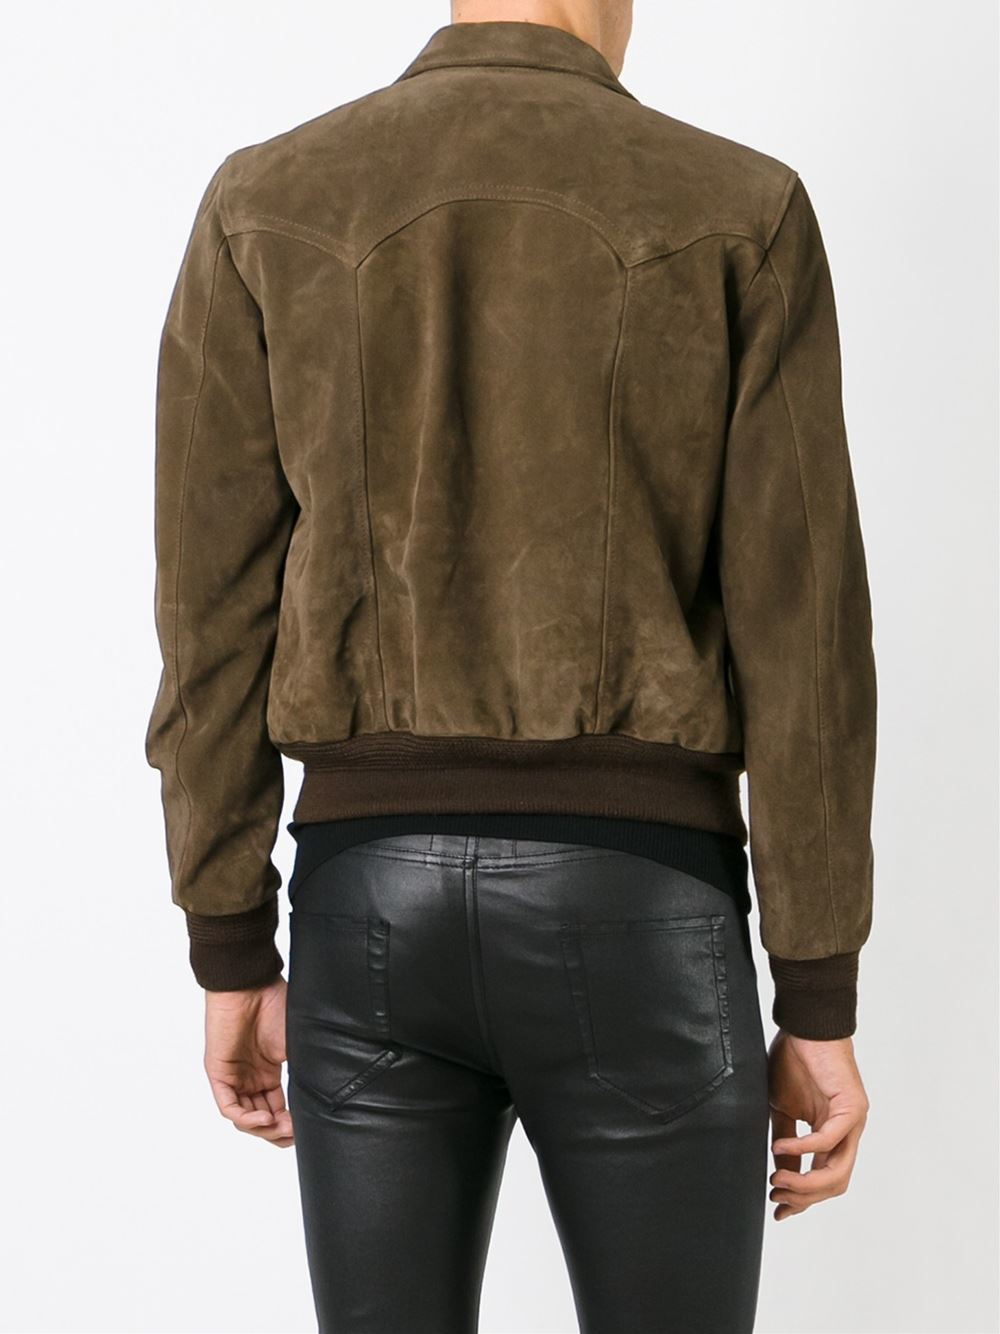 Saint Laurent Western Style Jacket in Brown for Men - Lyst